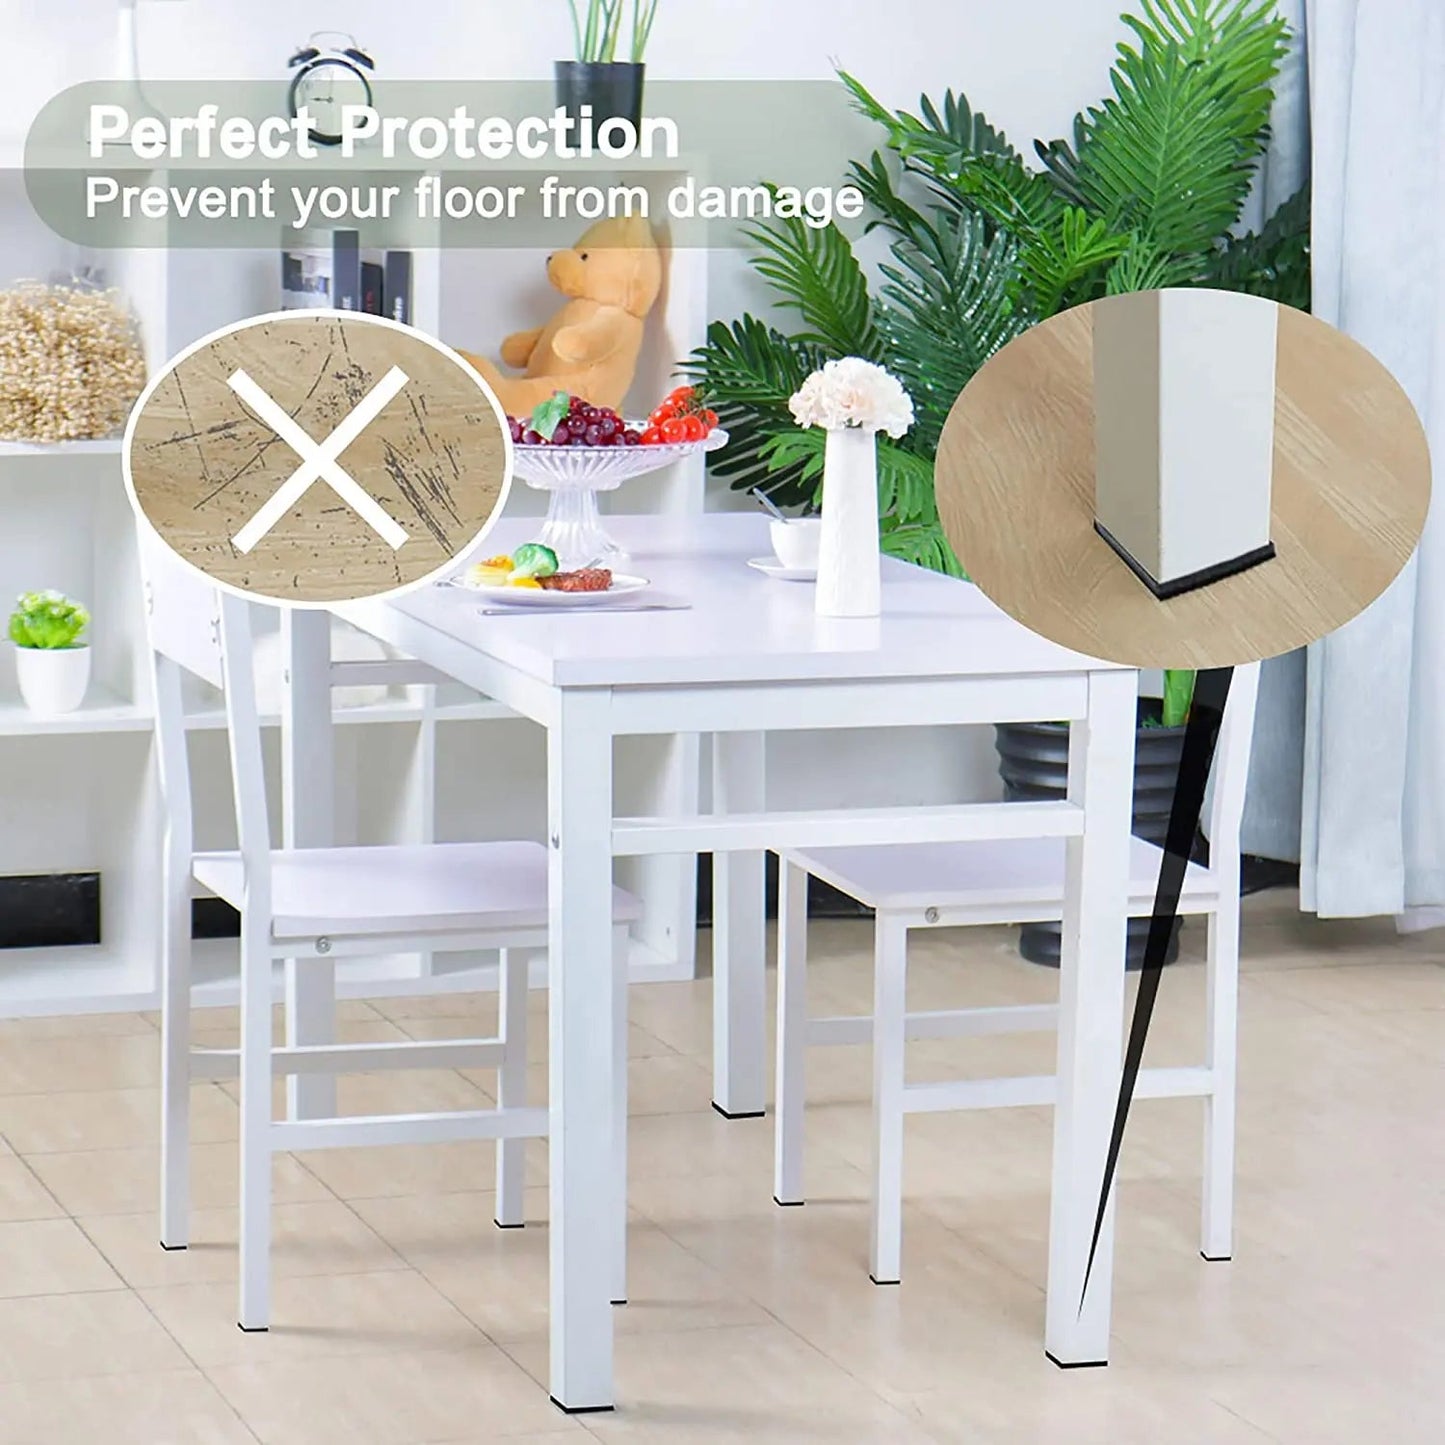 Furniture Pads Non- Skid Floor Protector 100Pcs furniture pads- Royalkart - The Urban Store